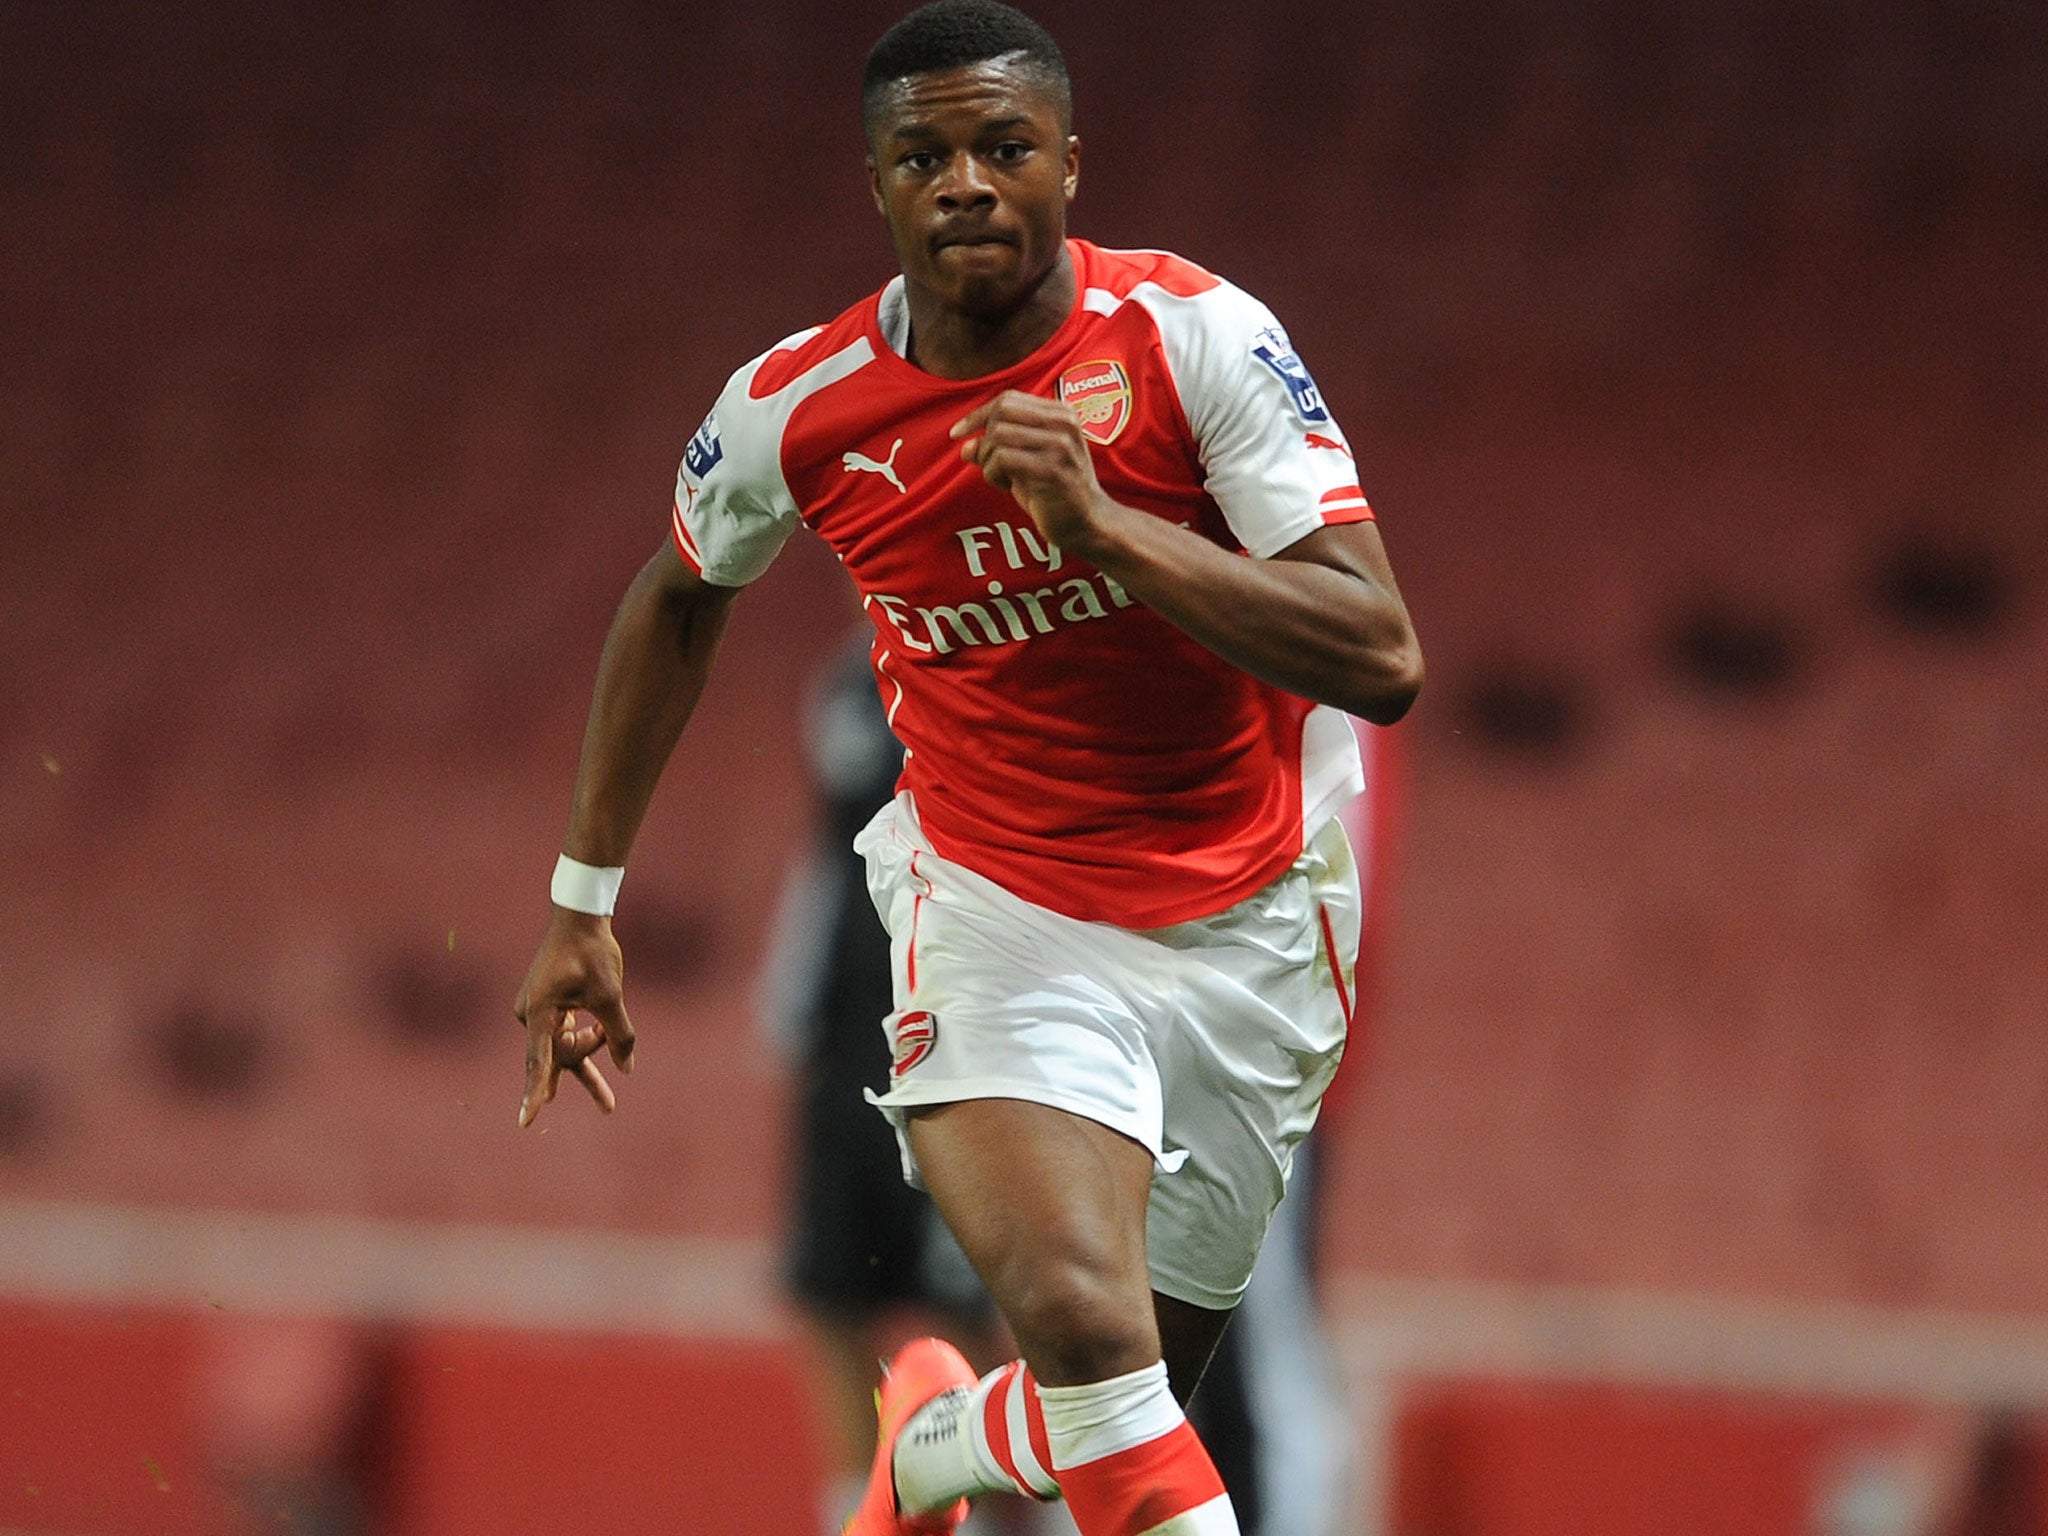 Chuba Akpom powers forward for Arsenal Under-21 side